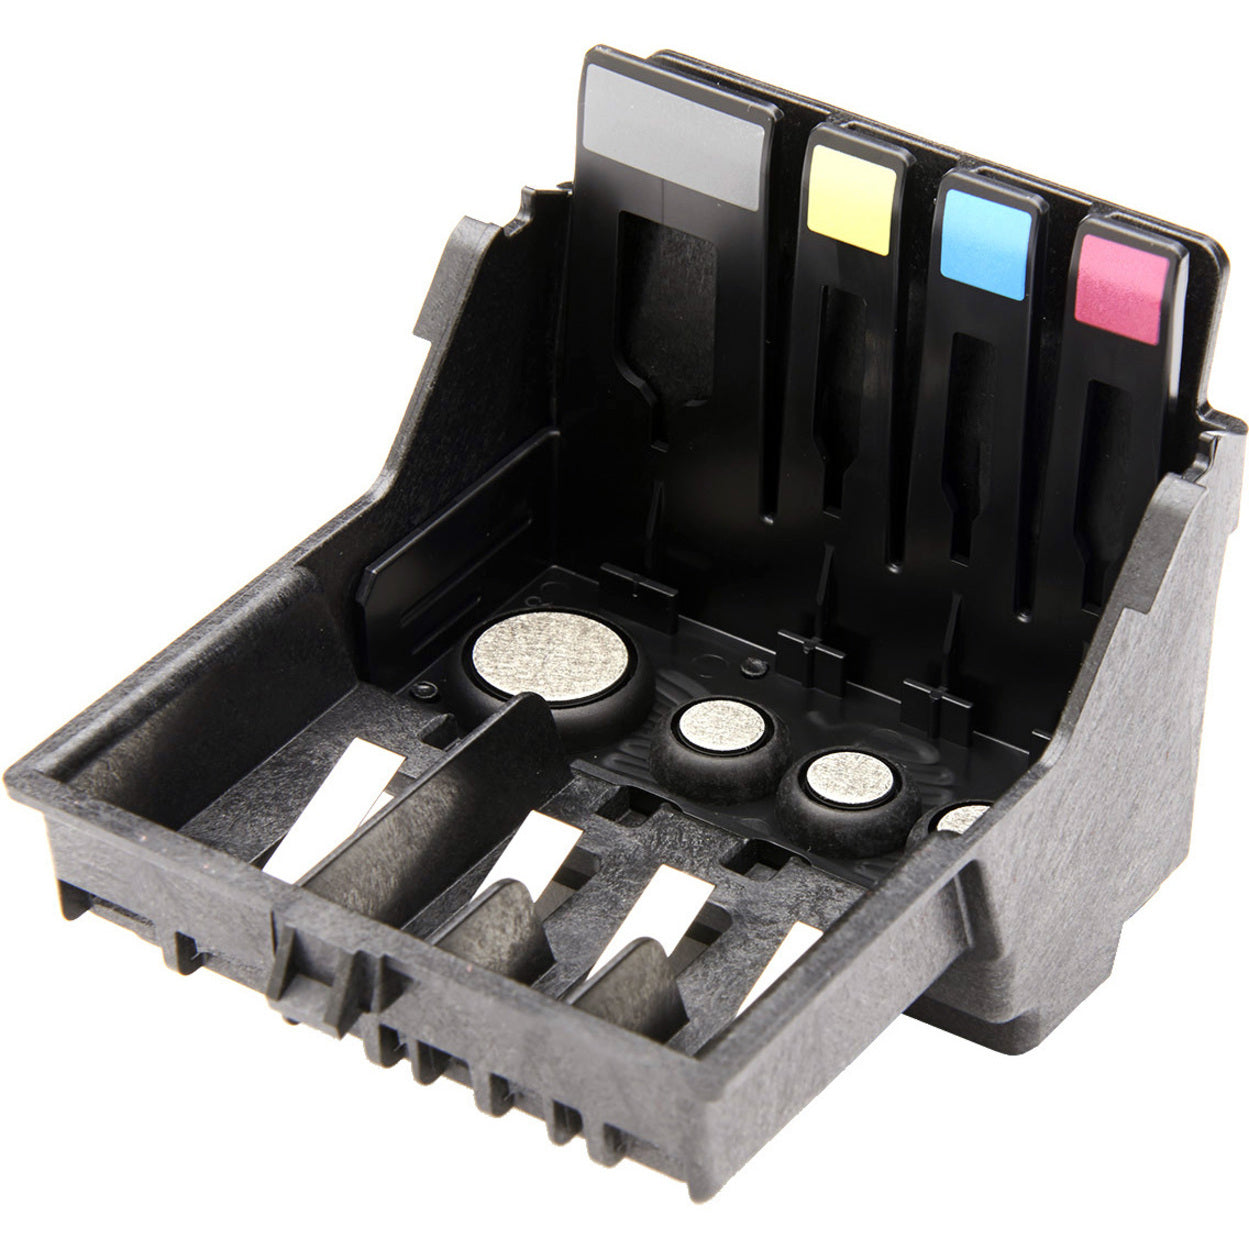 Primera 53470 Replacement Print Head, LX900 Inkjet Thermal Transfer Printhead - Color, Black Pack